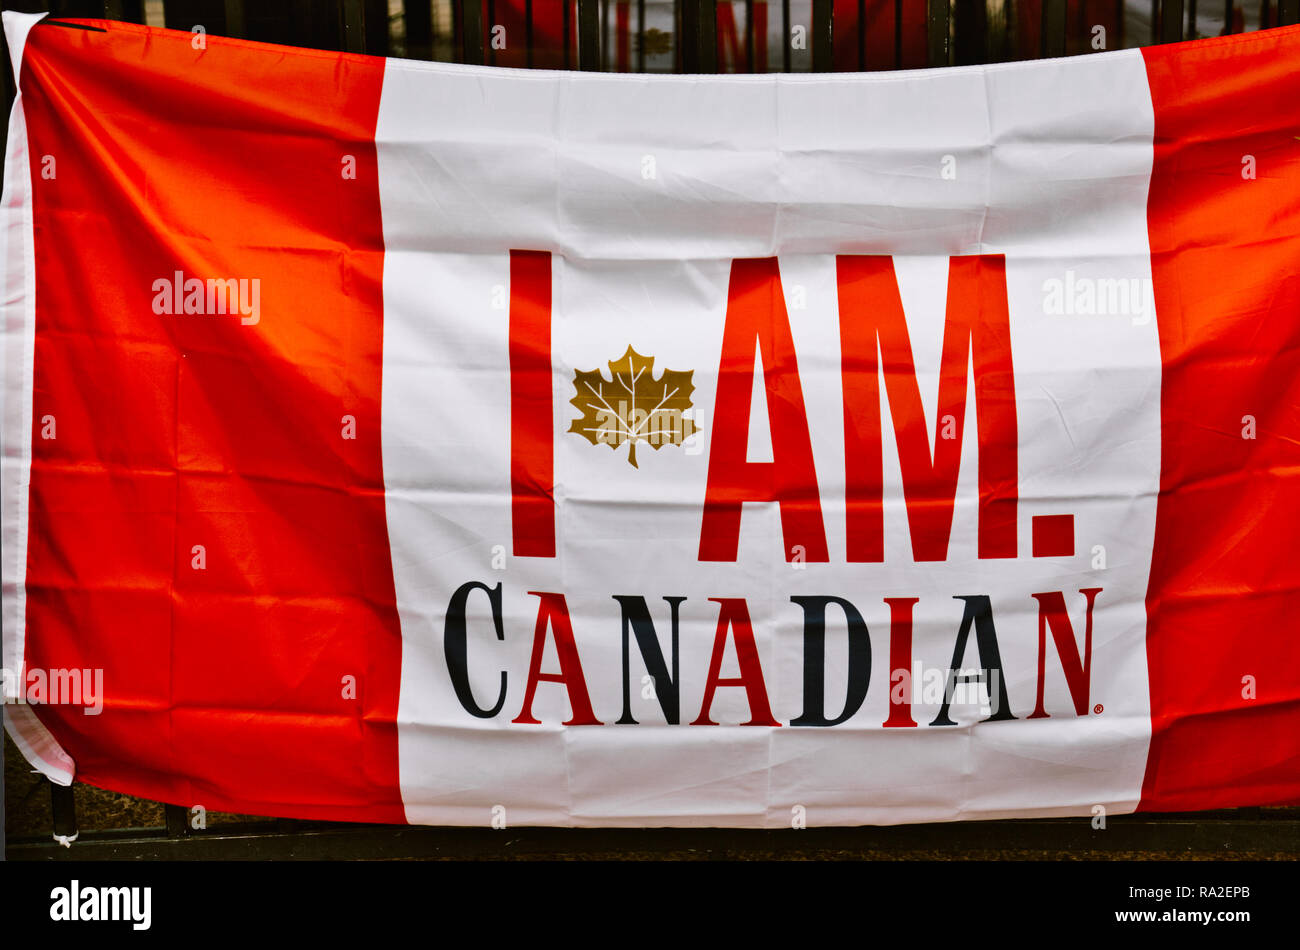 I am Canadian on a Canadian flag, Toronto, Ontario, Canada Stock Photo